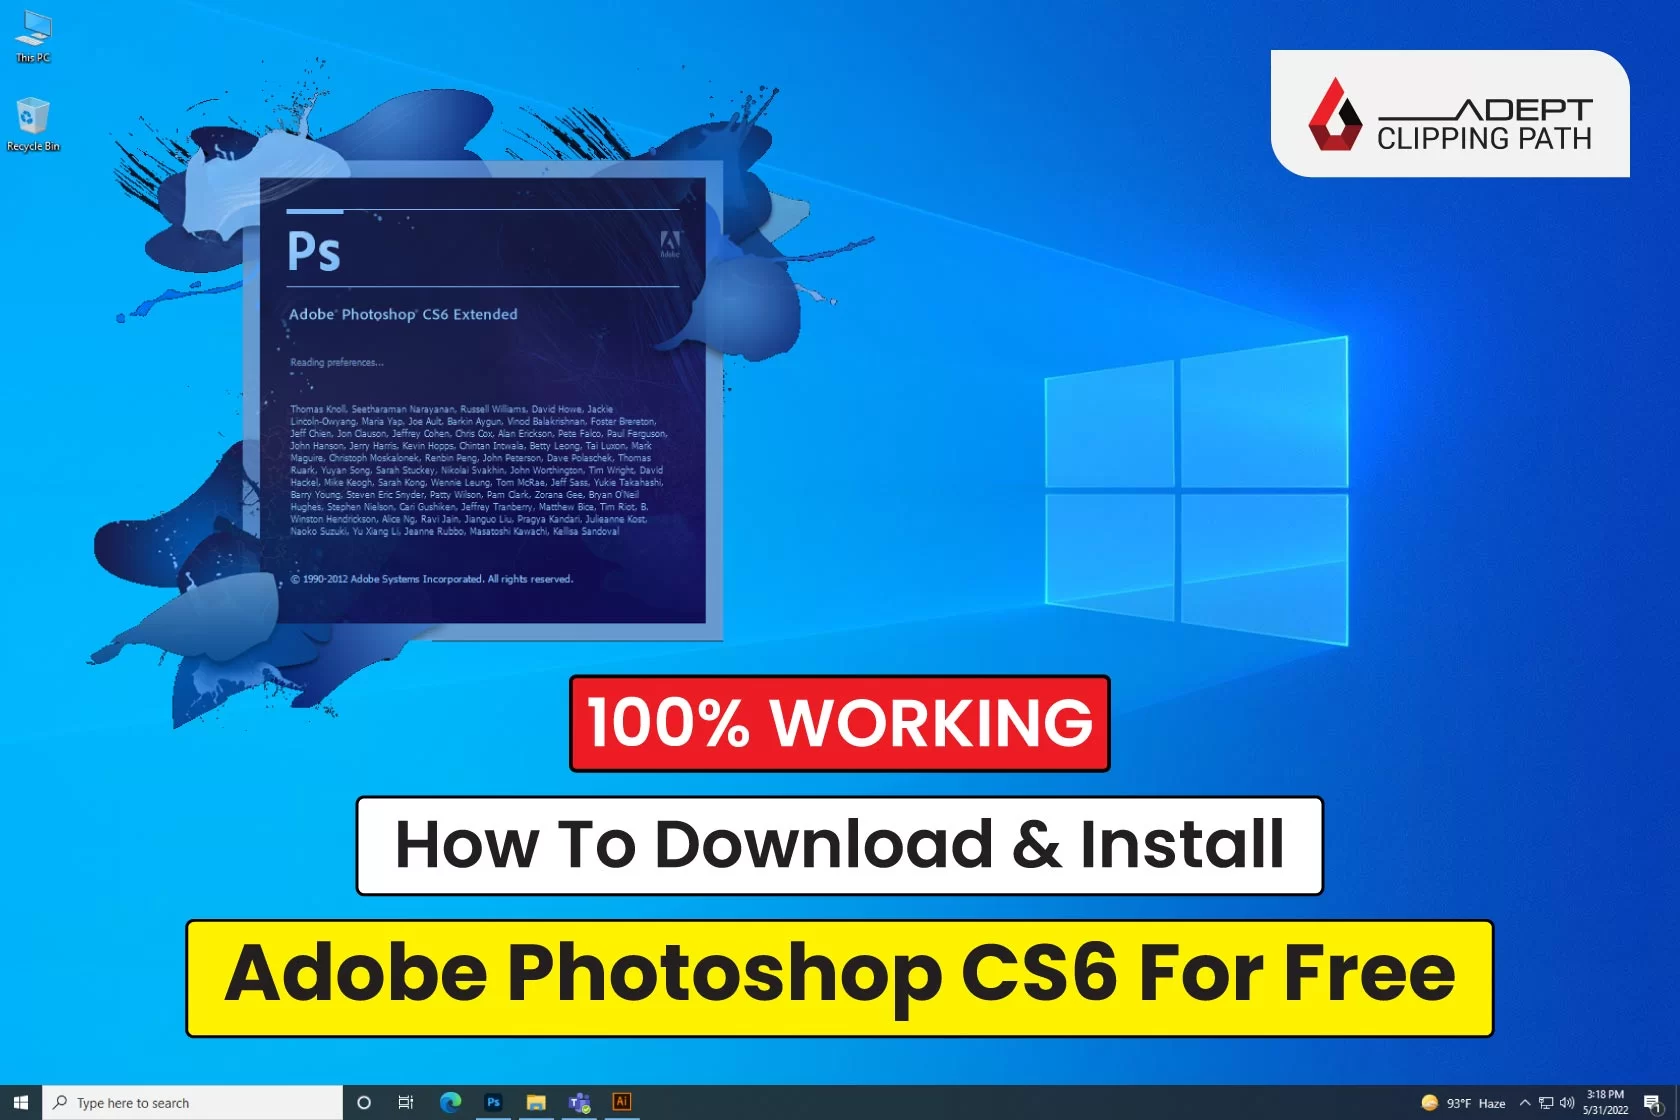 Adobe photoshop cs6 torrent download for windows 10 quantstudio design and analysis software download mac